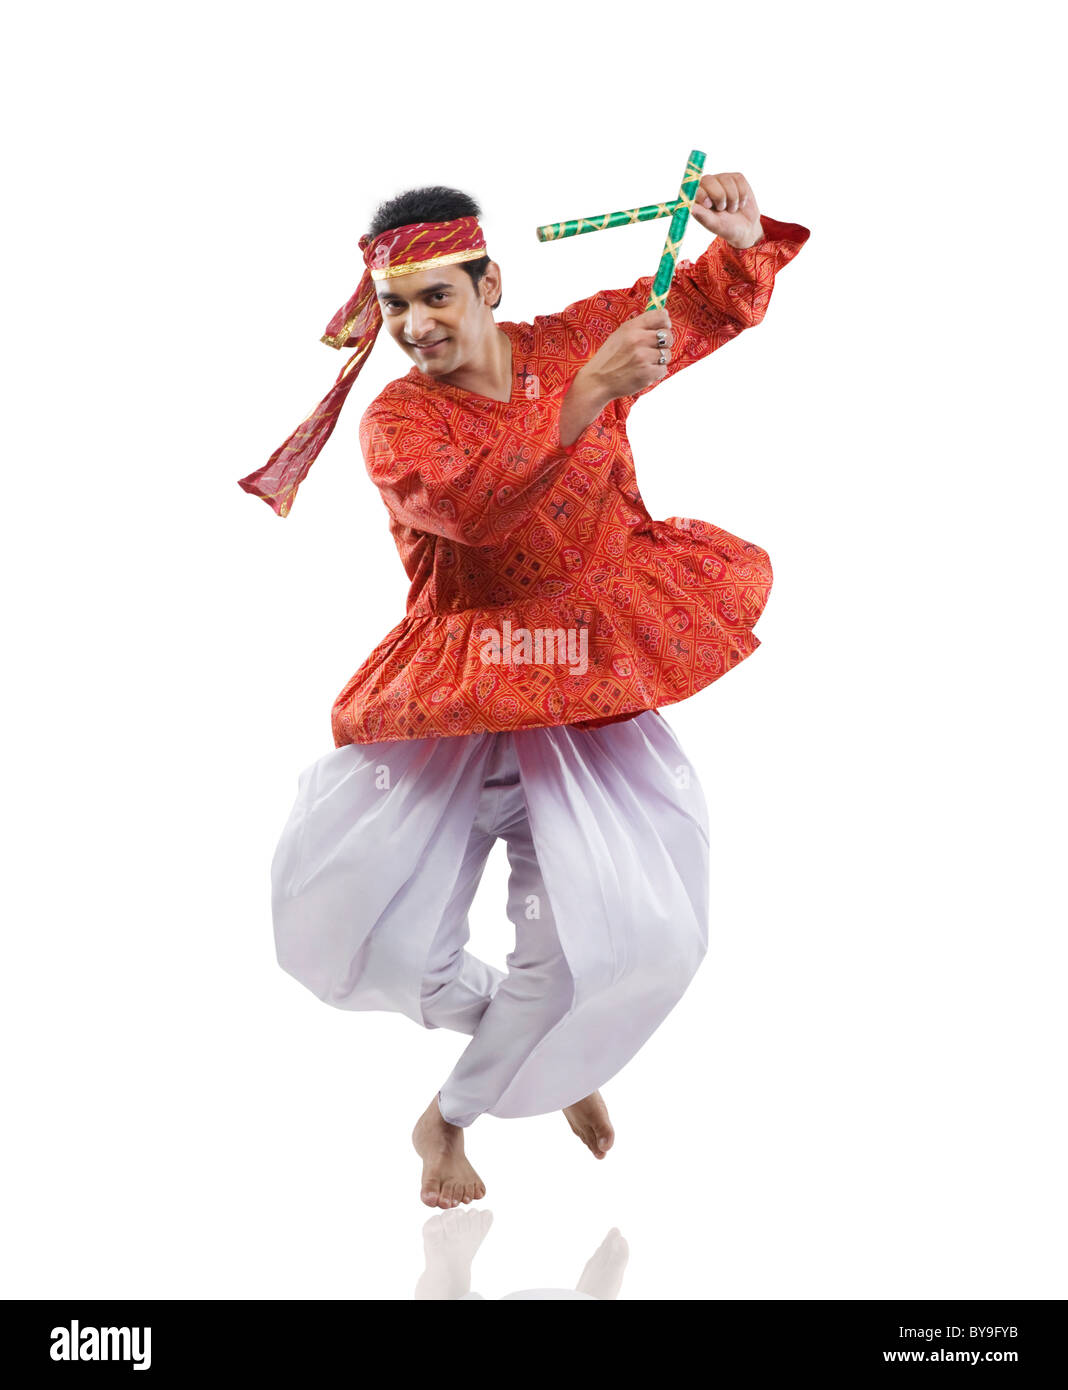 Gujarati man performing dandiya Stock Photo